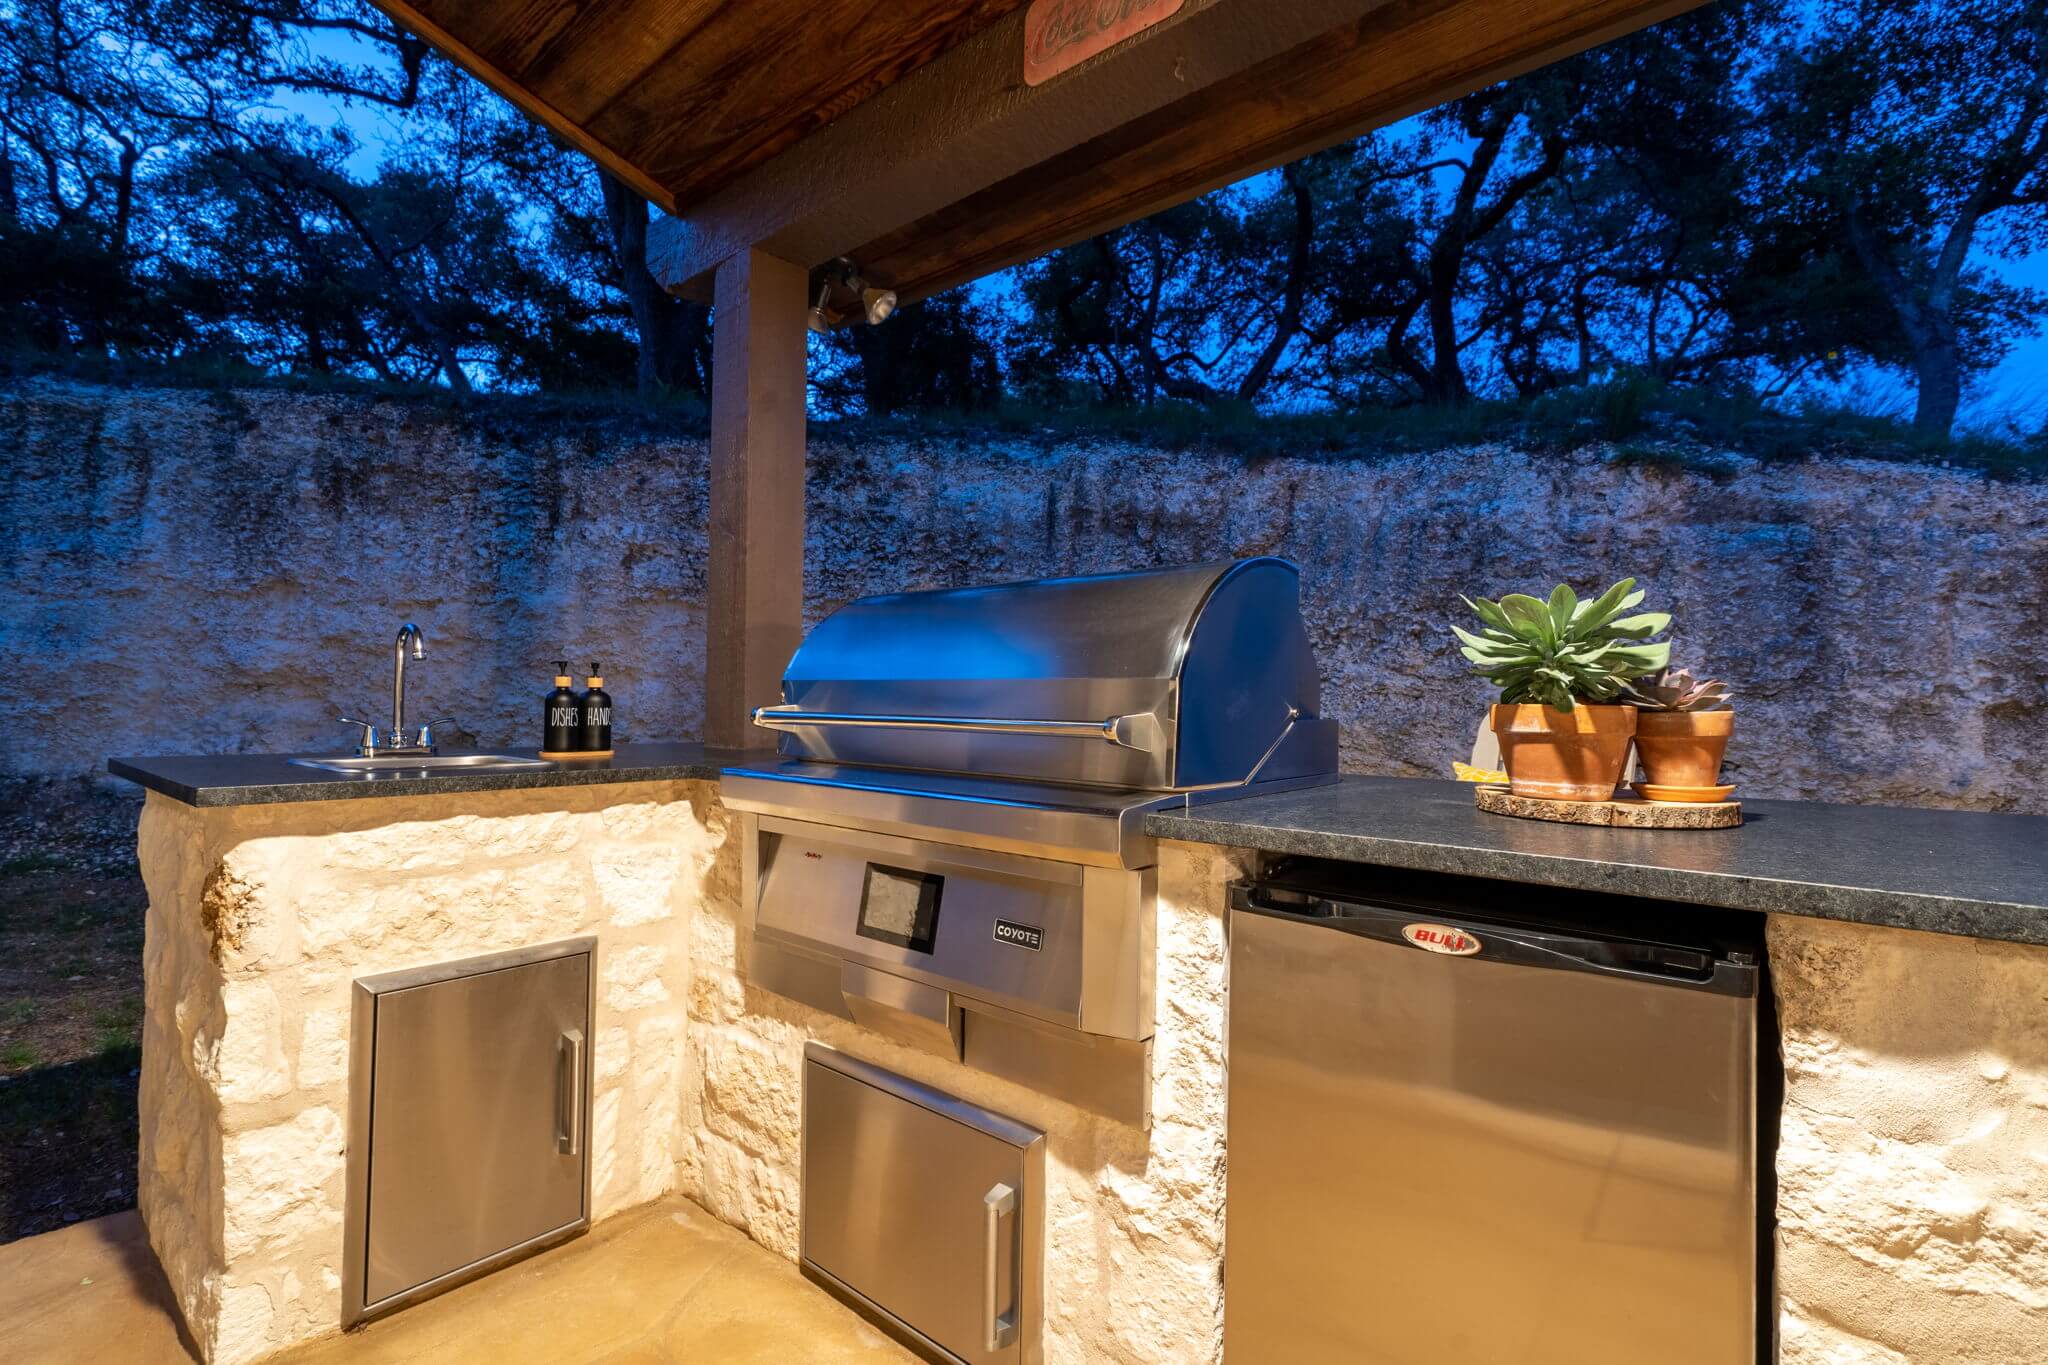 outdoor kitchen grill setup stone facade backyard patio remodel